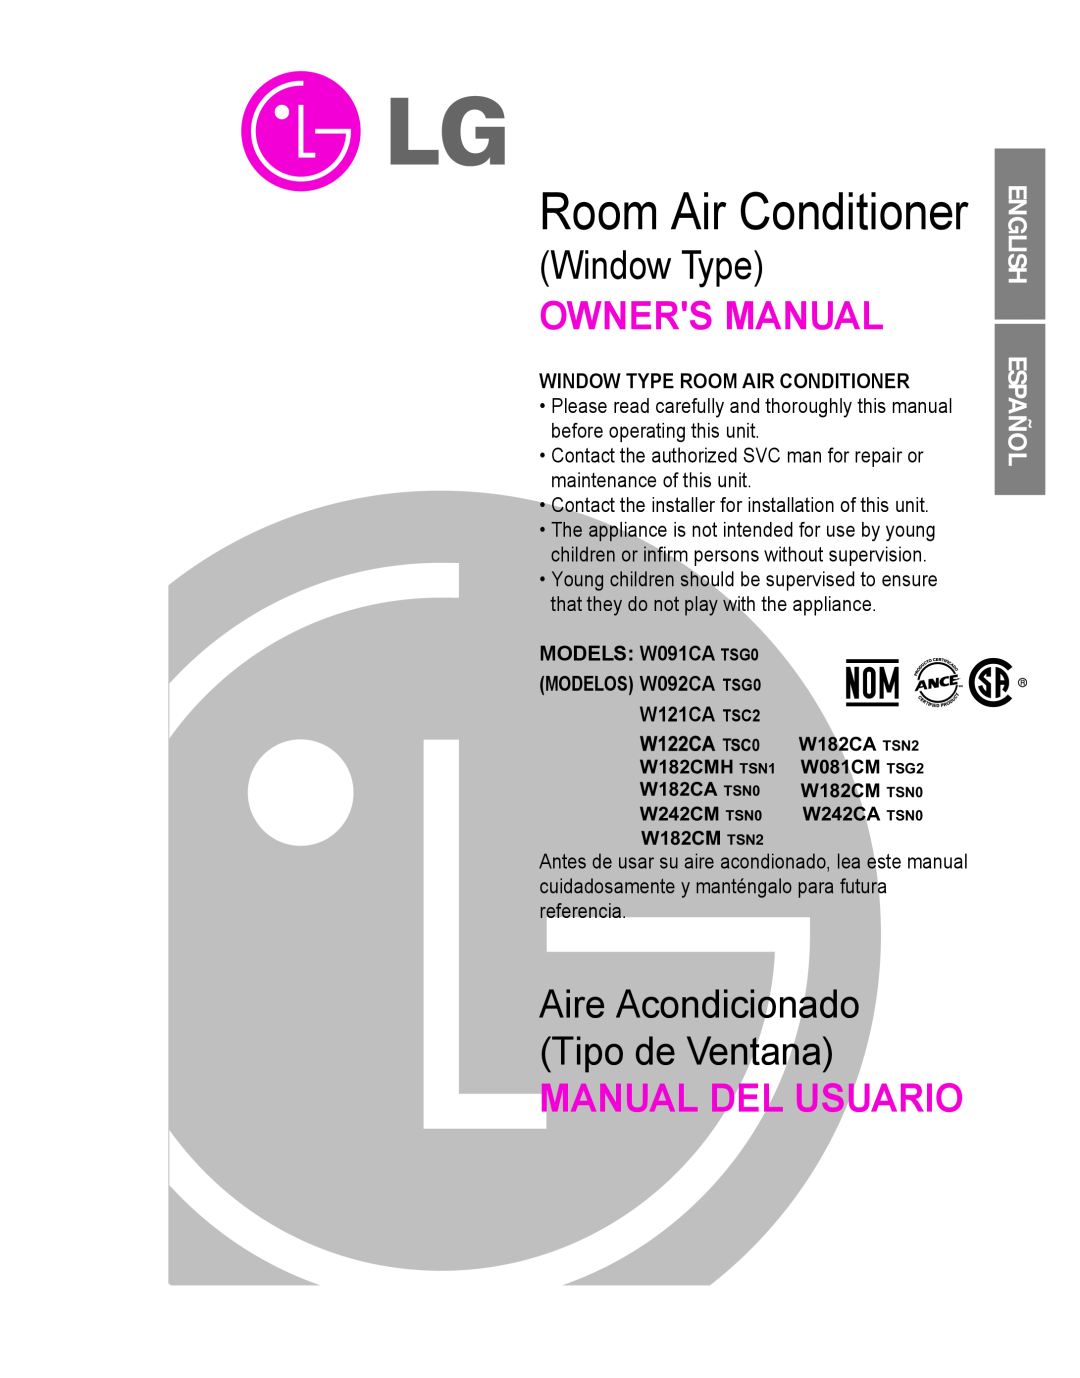 Minolta W121CA TSC2 owner manual English Español, Room Air Conditioner, Window Type, Manual Del Usuario 